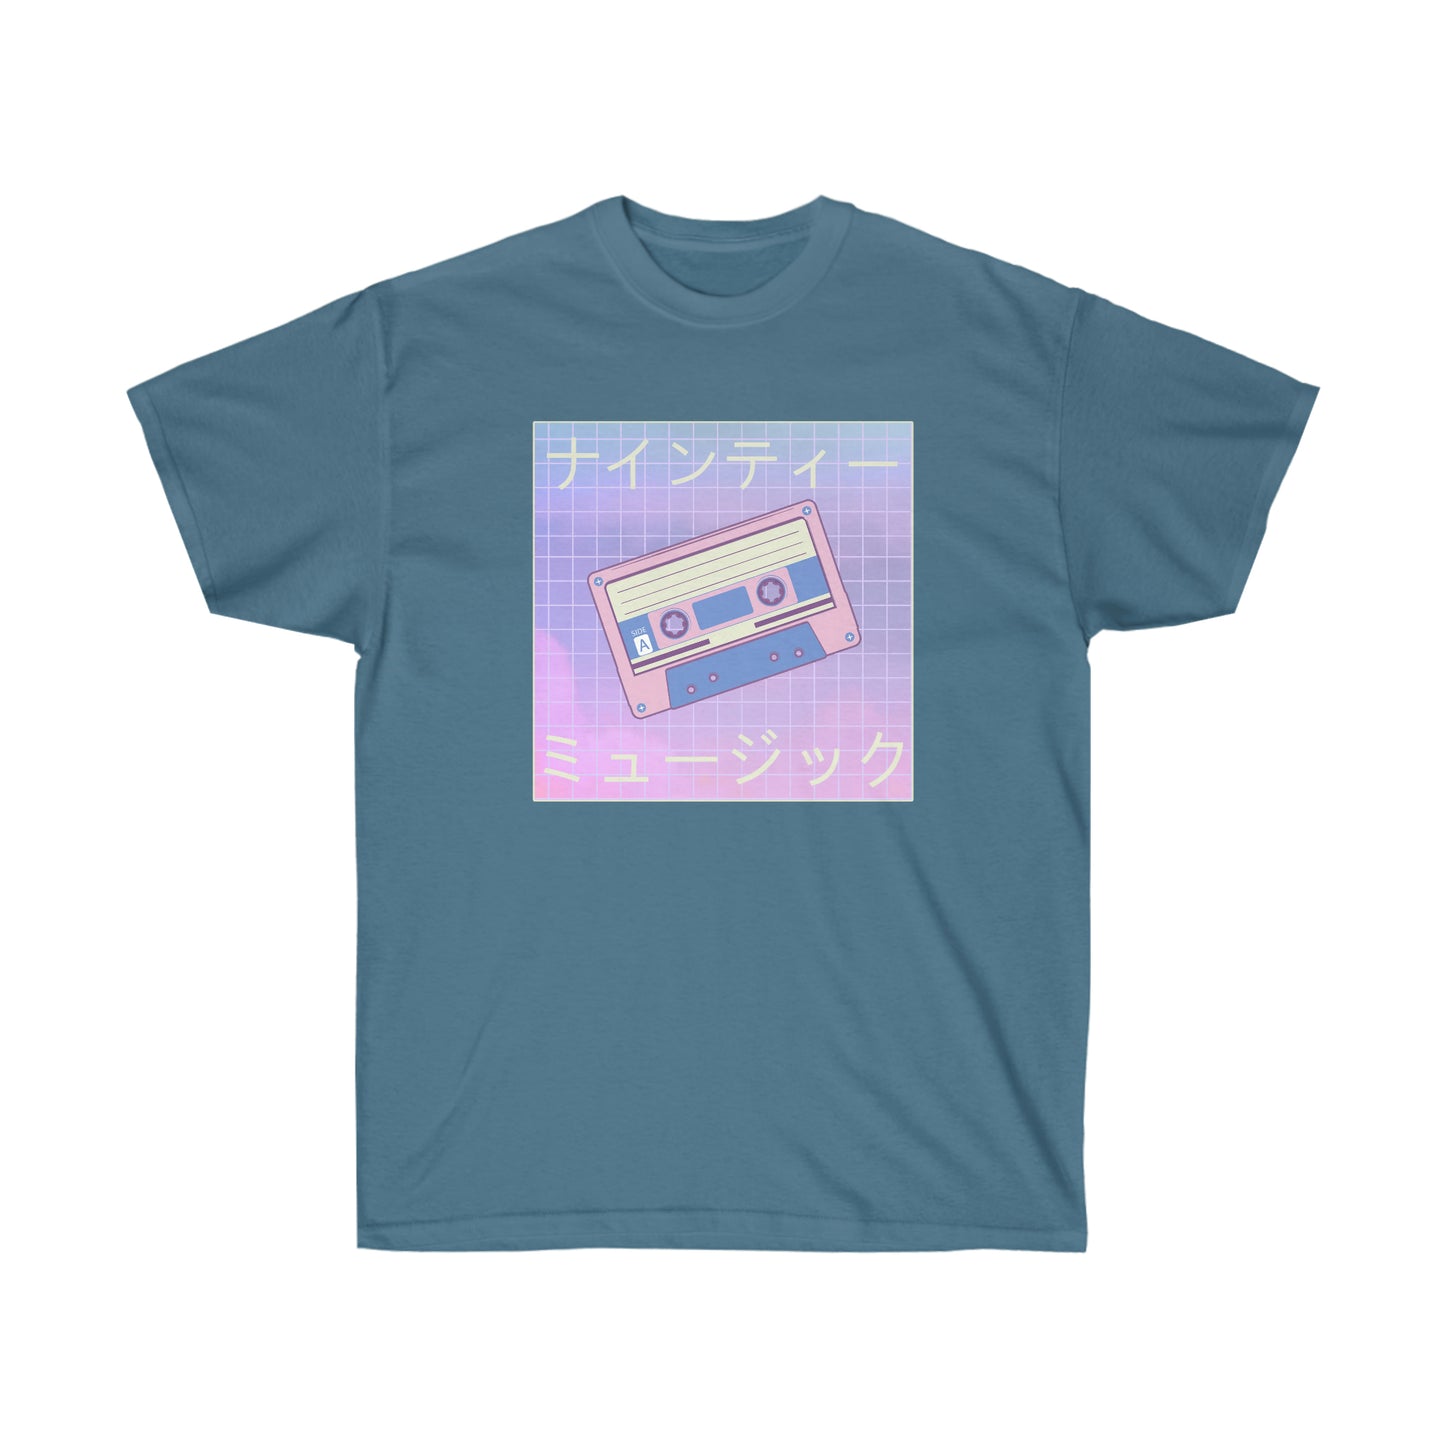 Vaporwave Mixtape shirt, Japanese Aesthetic, vapor wave shirt Pastel Synthwave tee, Japan Street Wear Grunge Clothing Retrofuturism